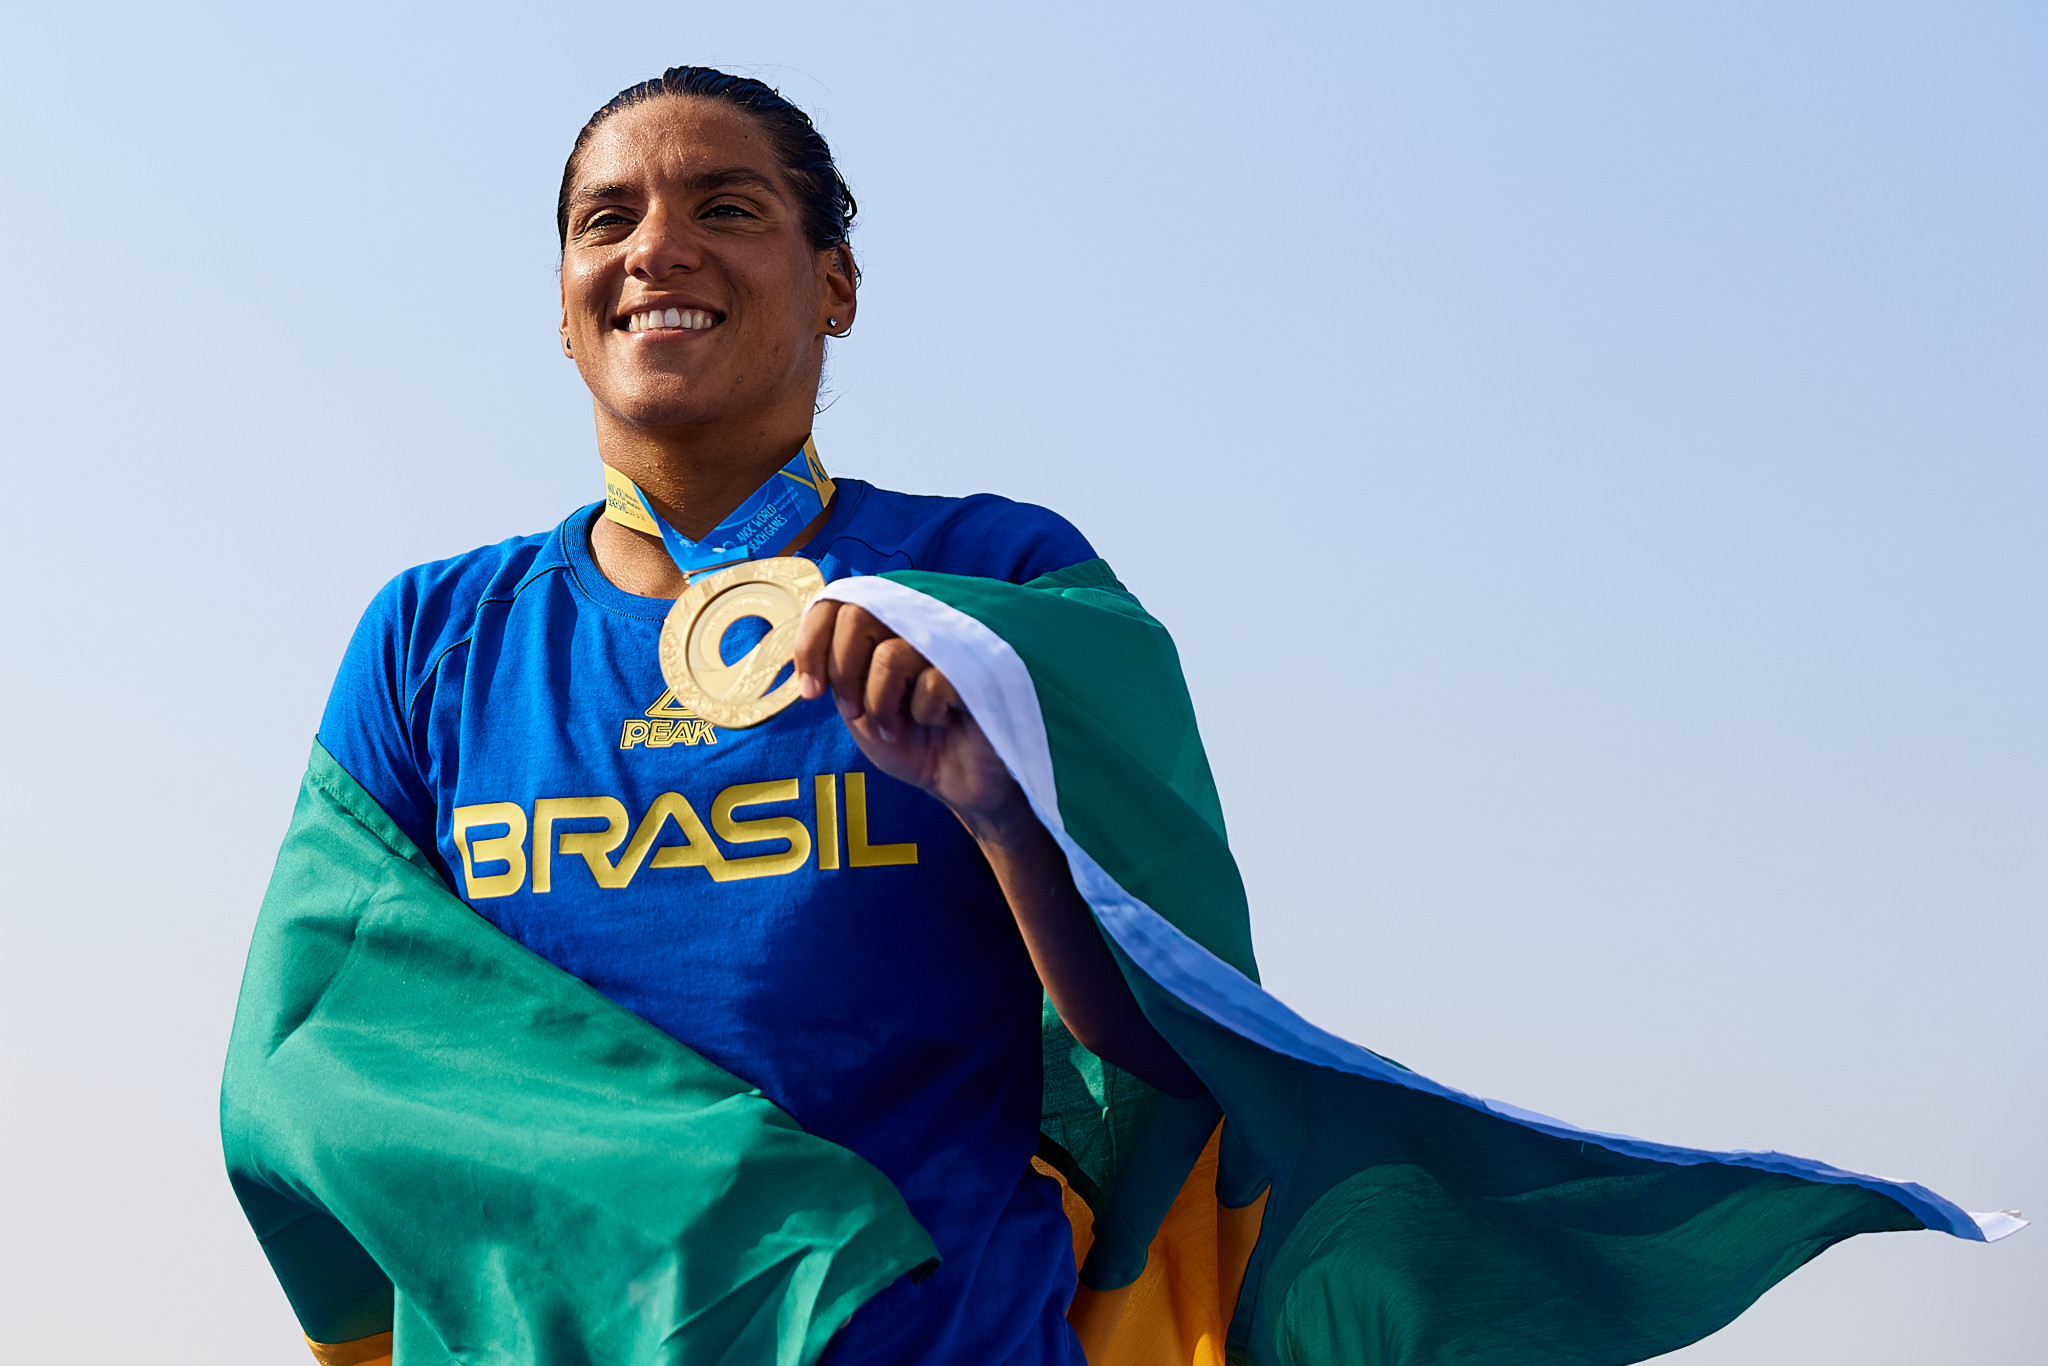 Ana De Jesus Soares of Brazil was the women's champion ©ANOC